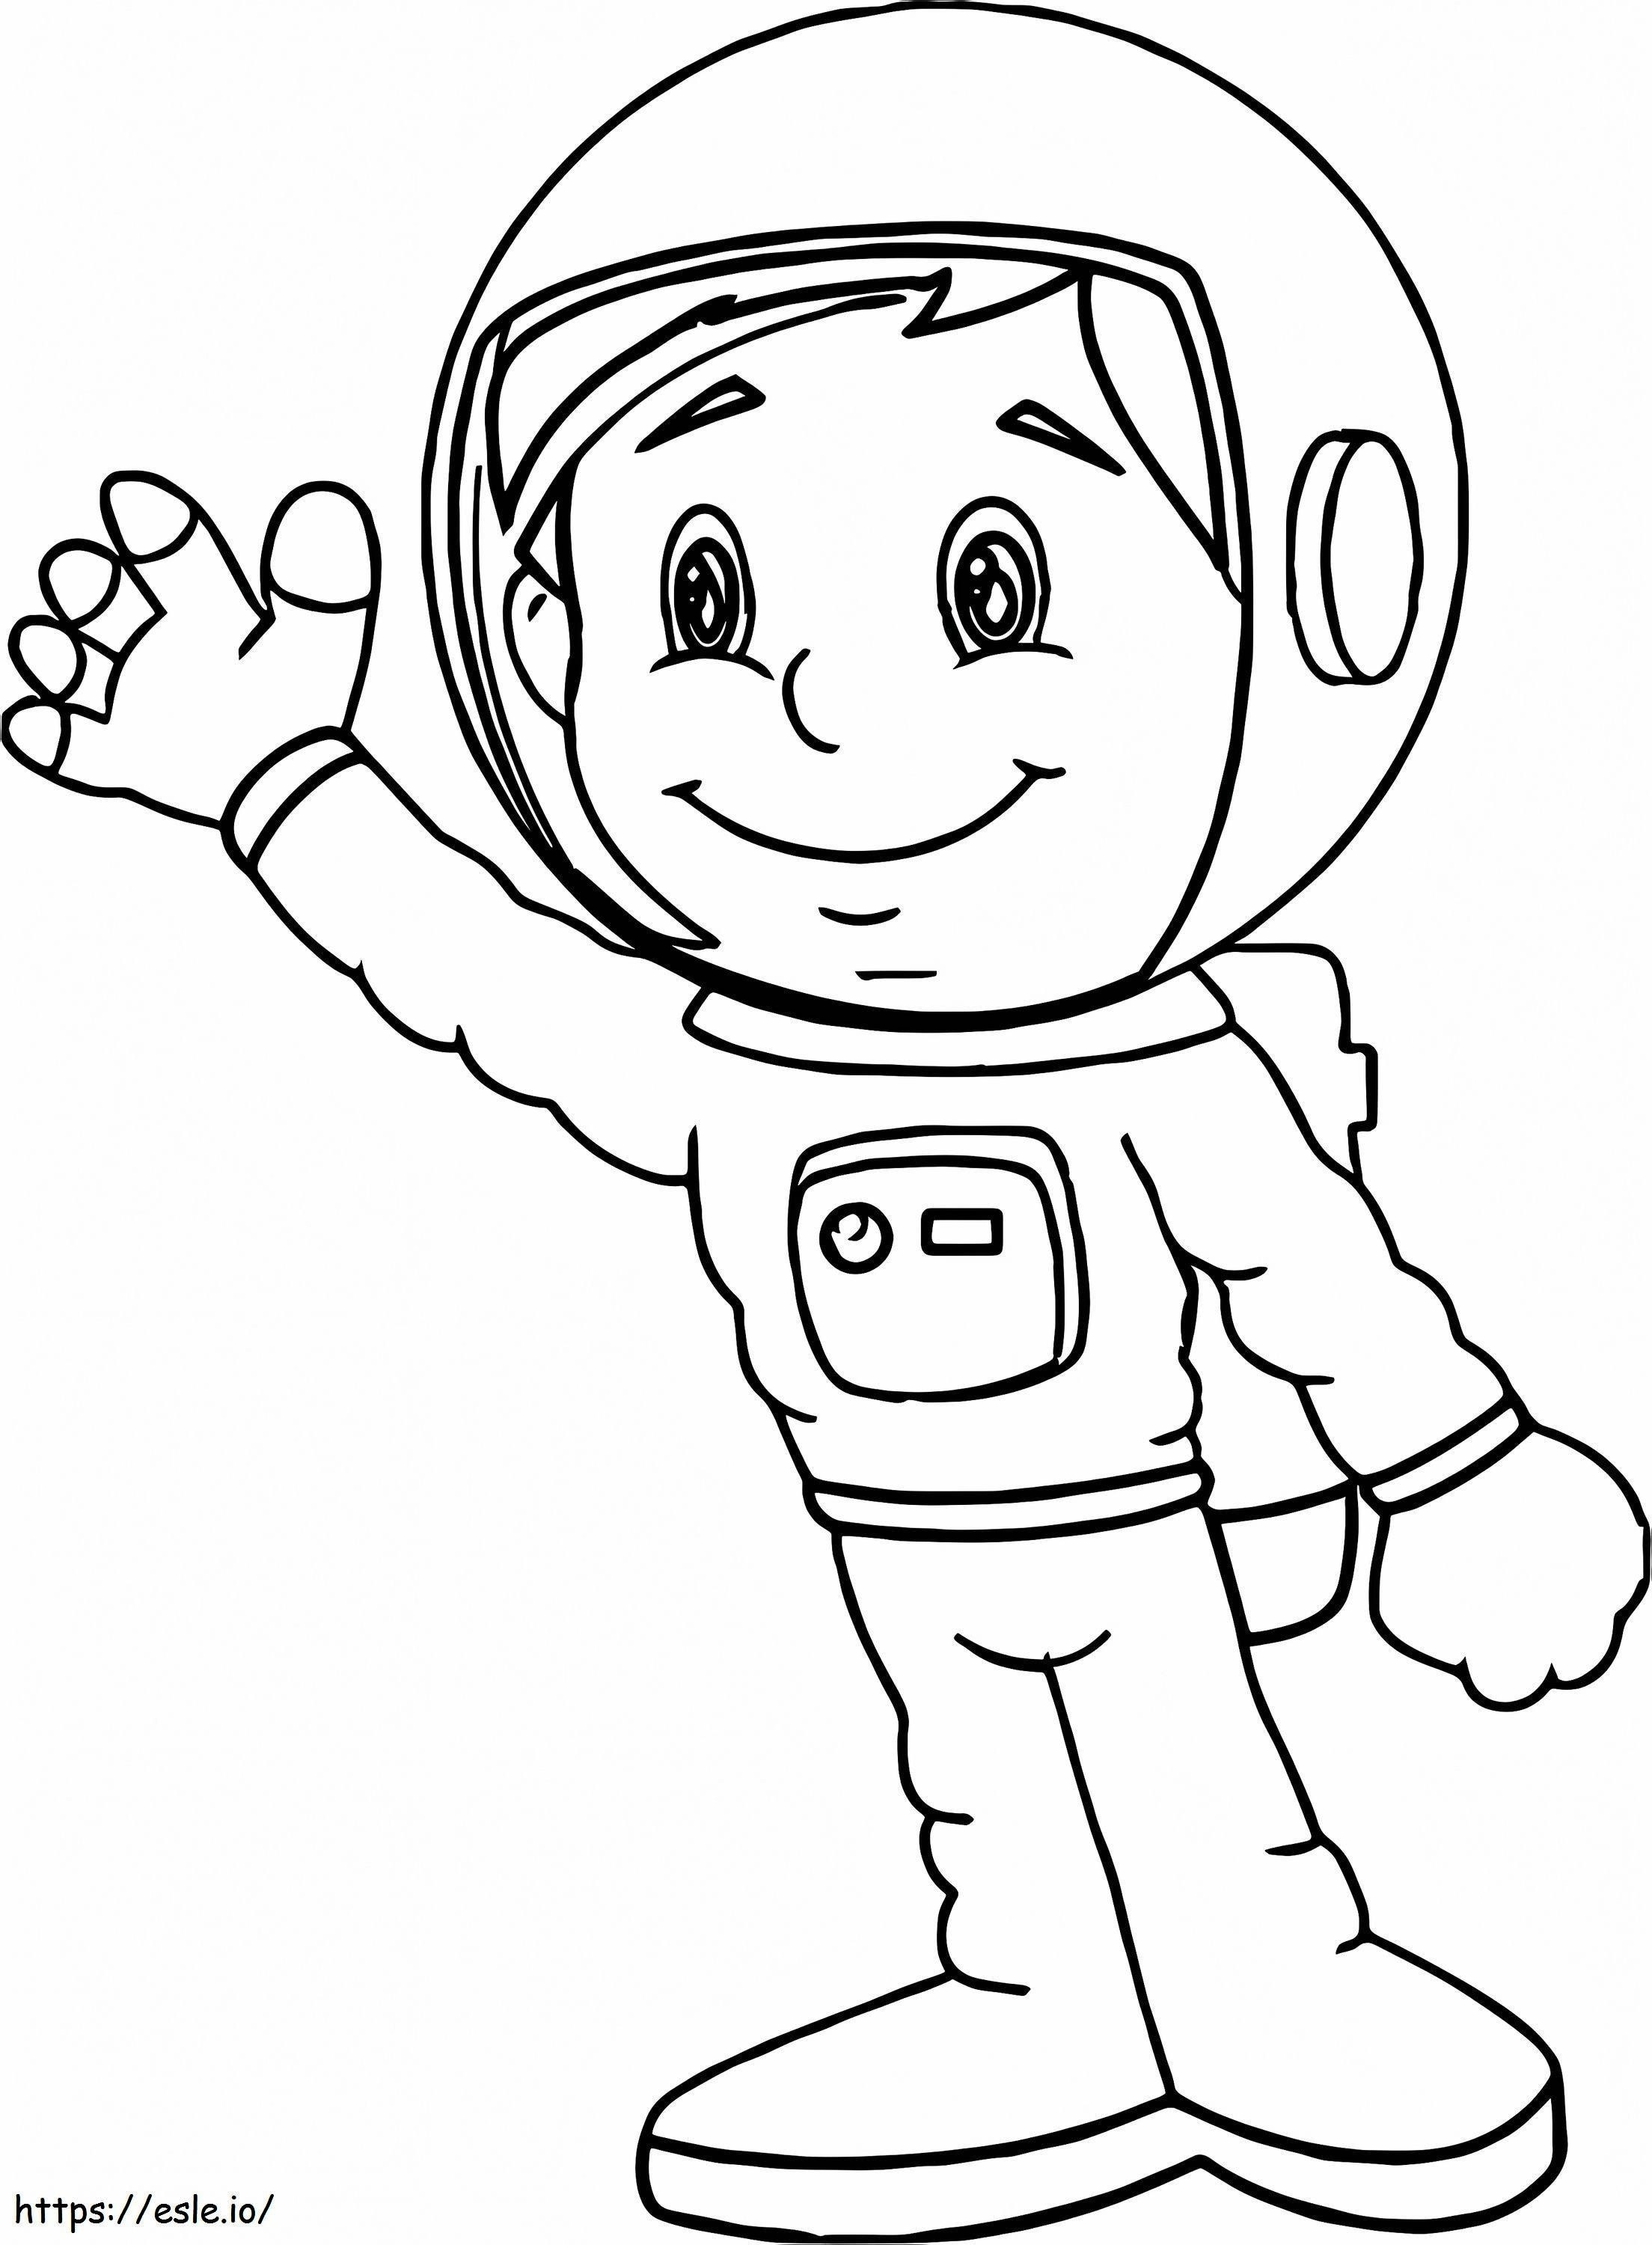 1545723953 Dibujos Para Colorear De Astronauta Imprimibles Gratis Astronauta para colorear